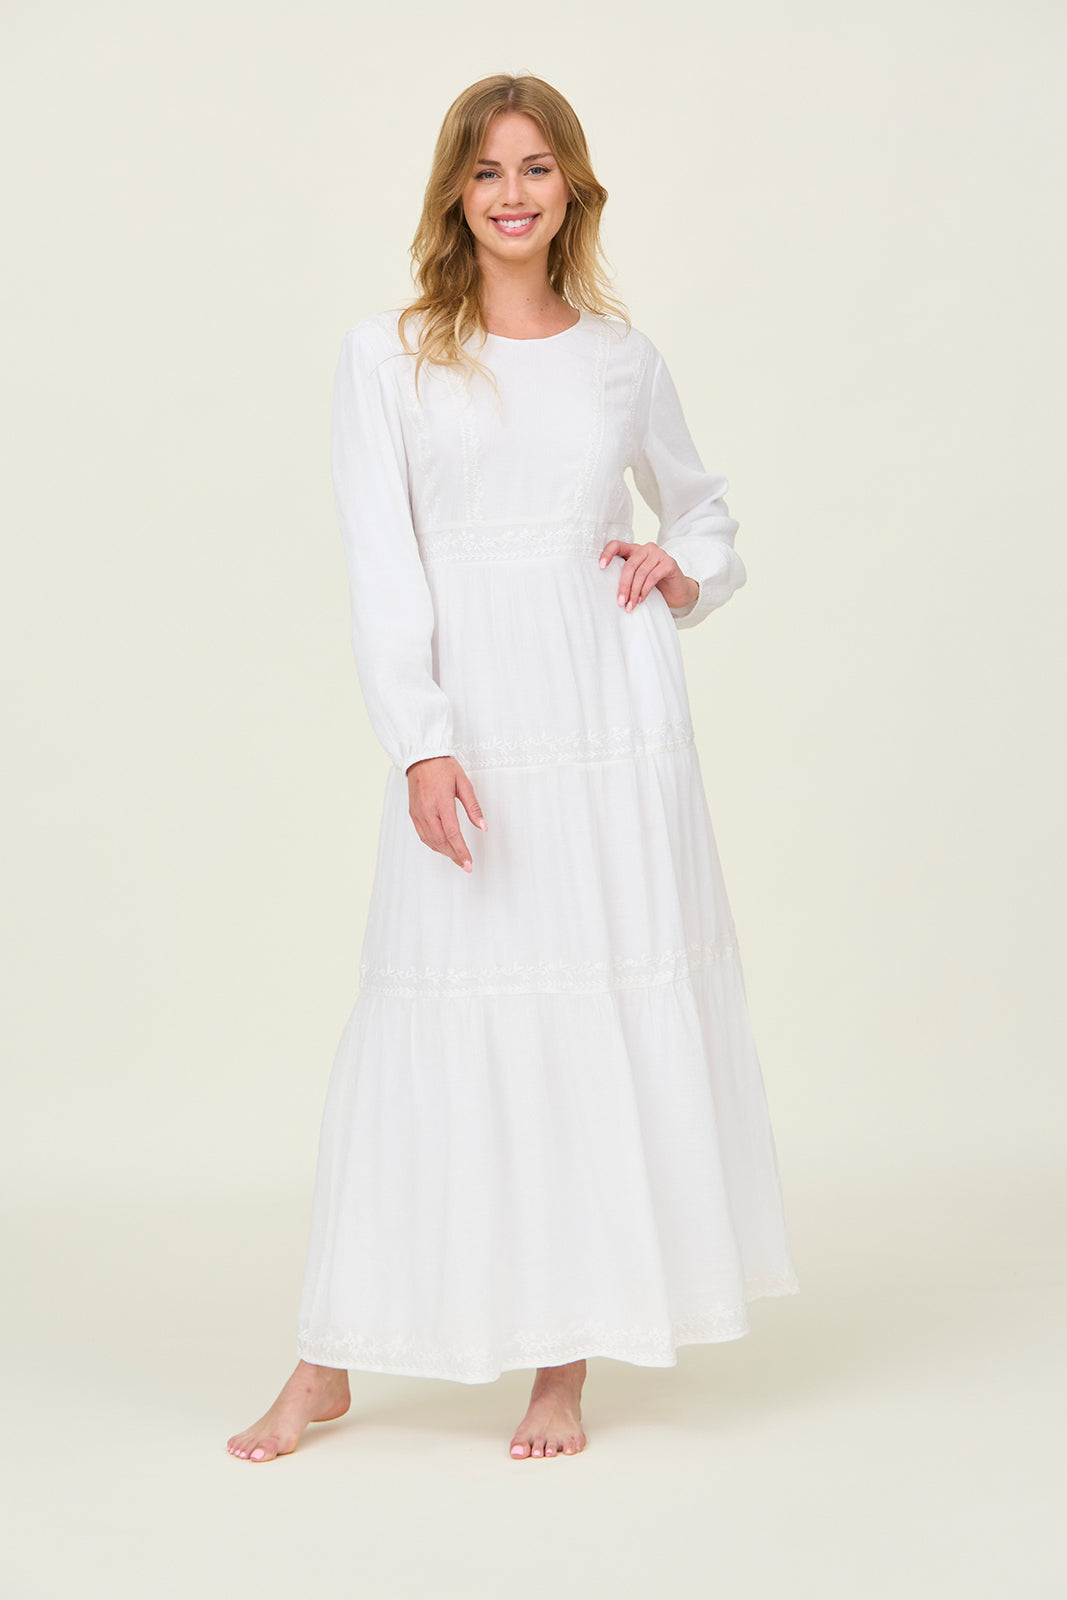 white temple dress